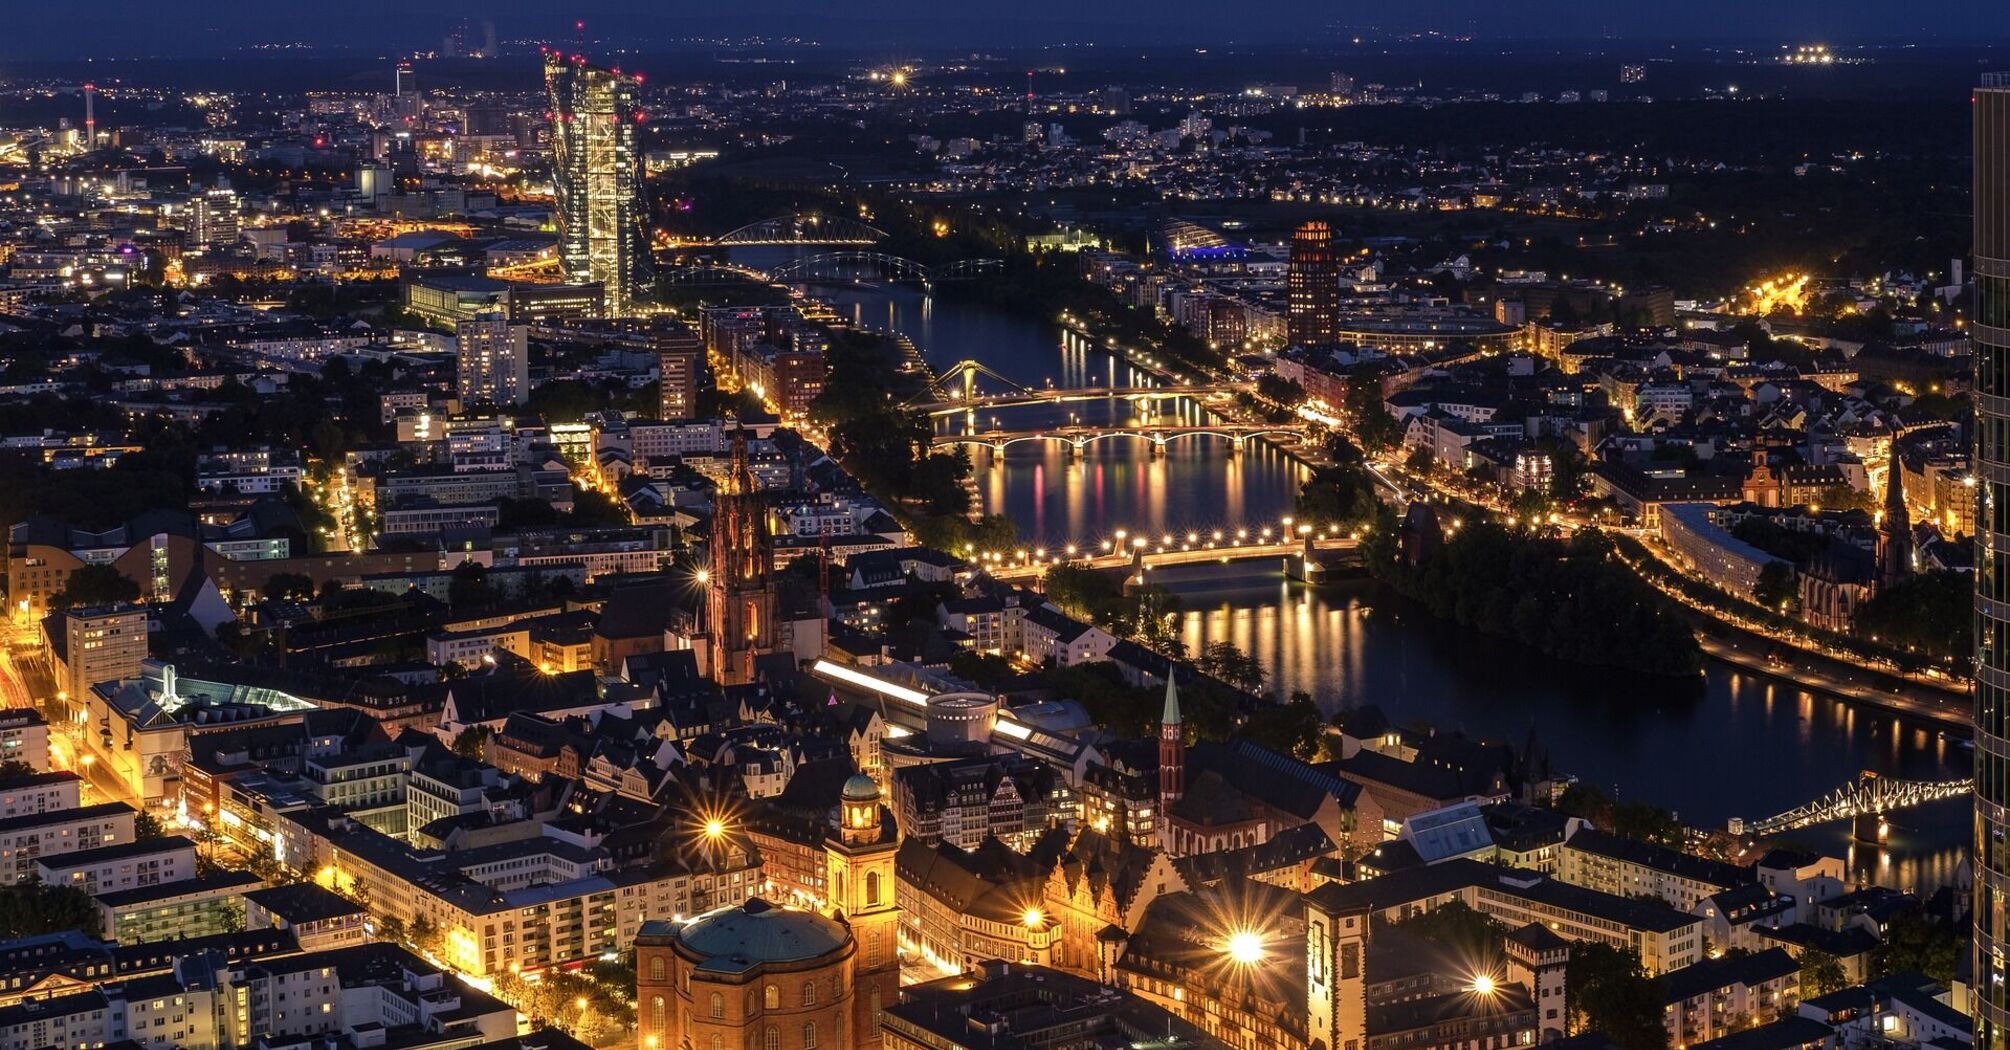 Frankfurt cityscape at night with illuminated bridges and buildings